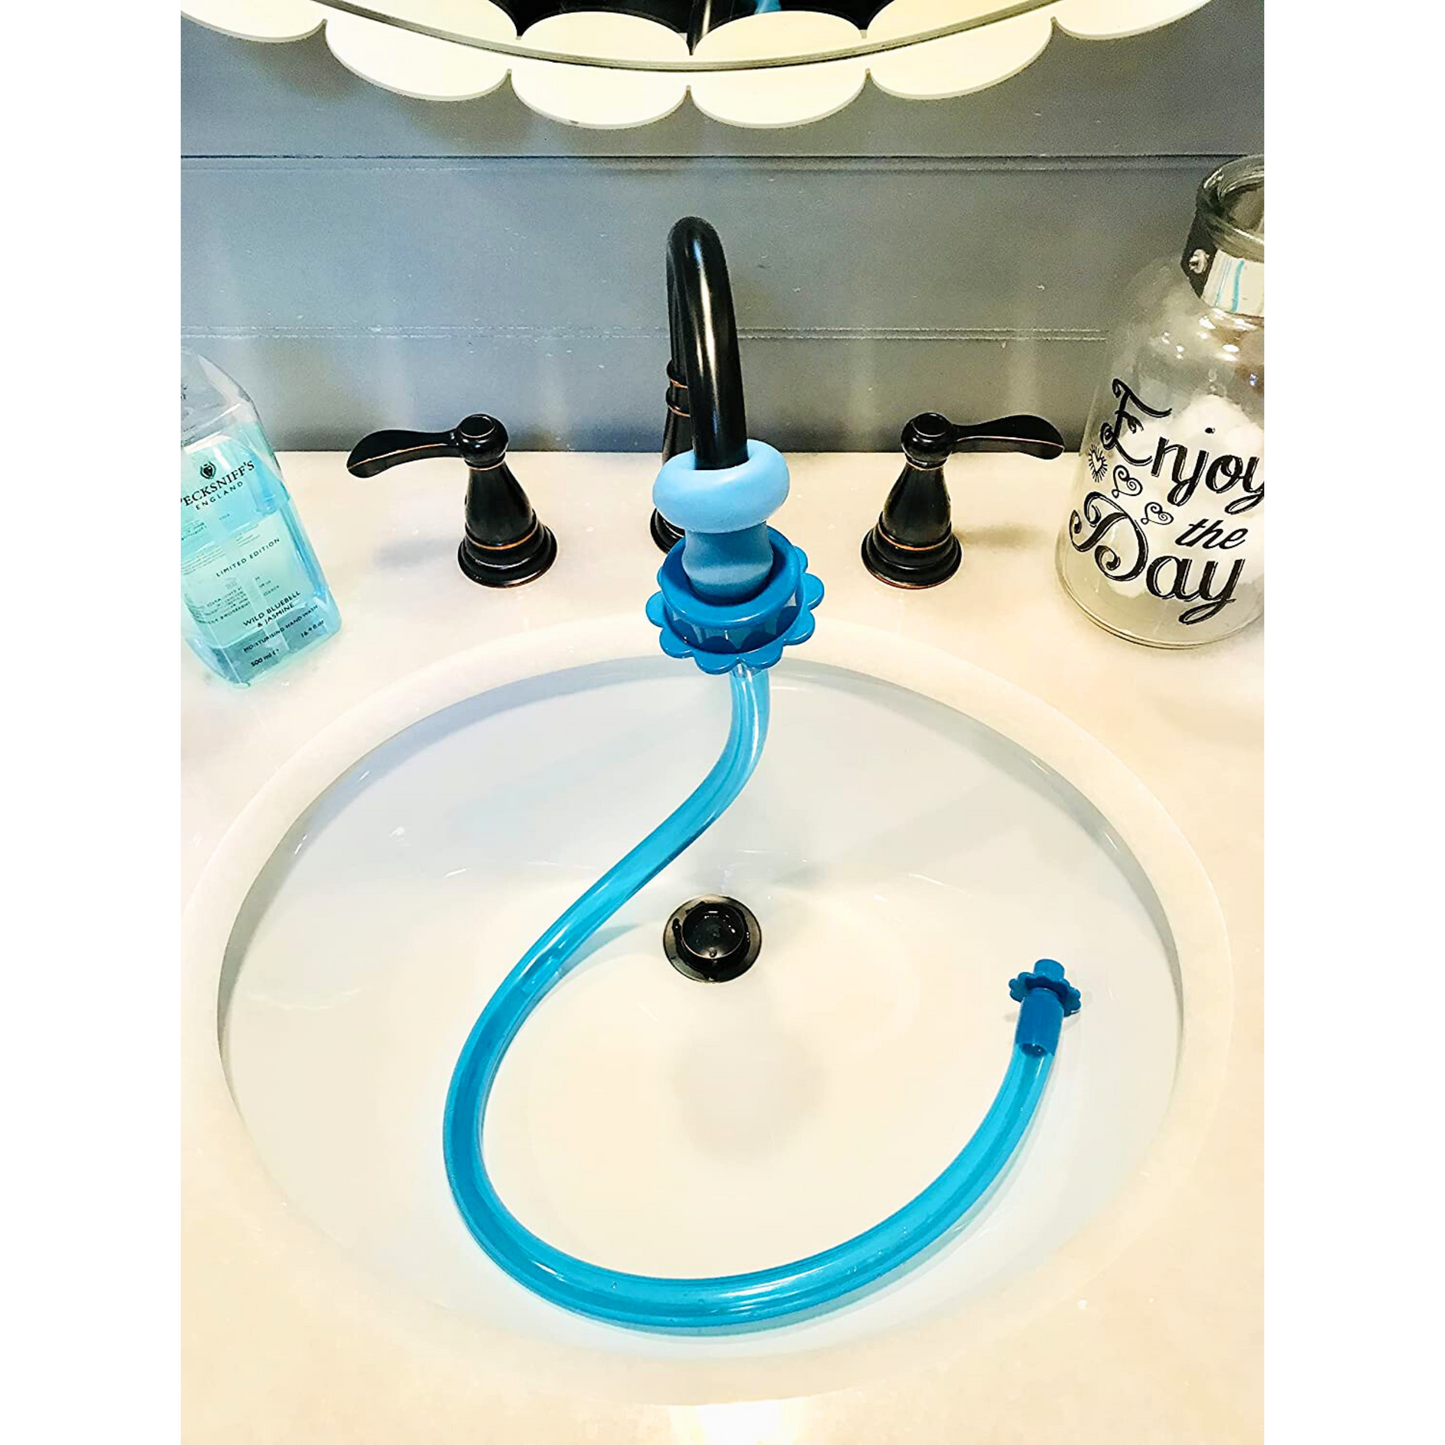 Rinseroo XL: 6 Foot Slip-on, Handheld Showerhead Attachment Hose for Sink/Shower